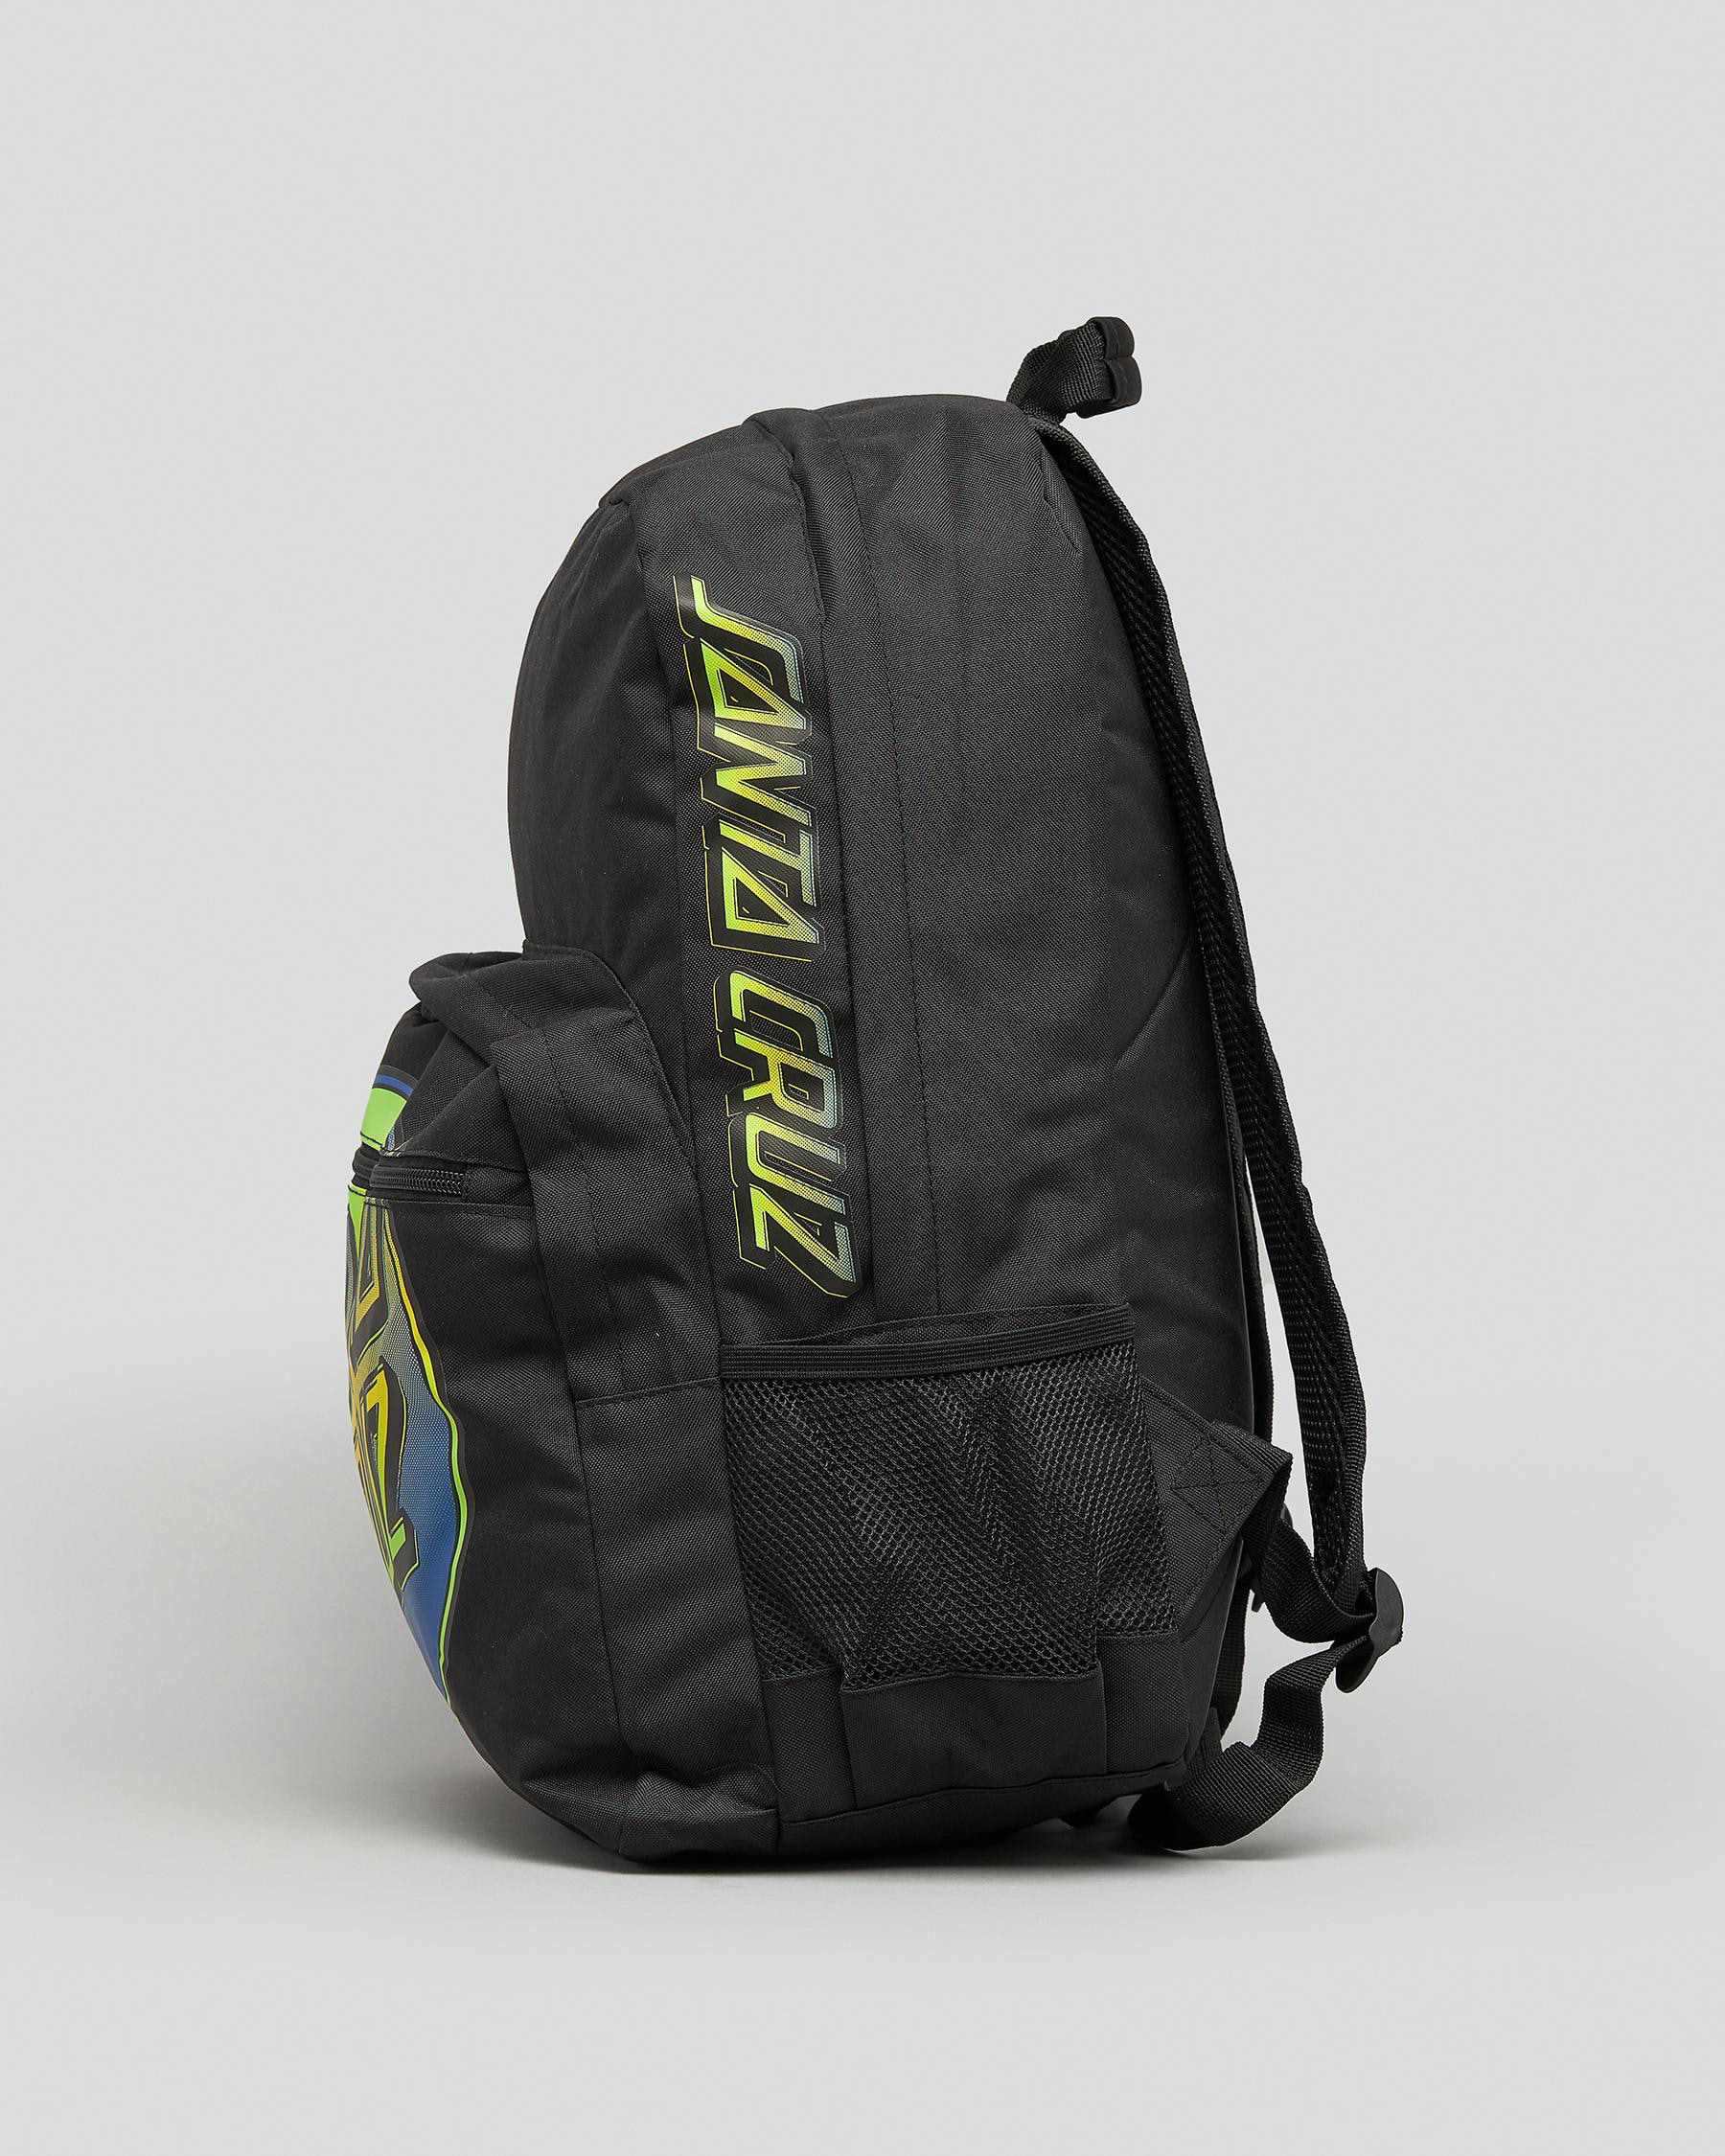 Santa Cruz Contra Dot Backpack In Black - Fast Shipping & Easy Returns ...